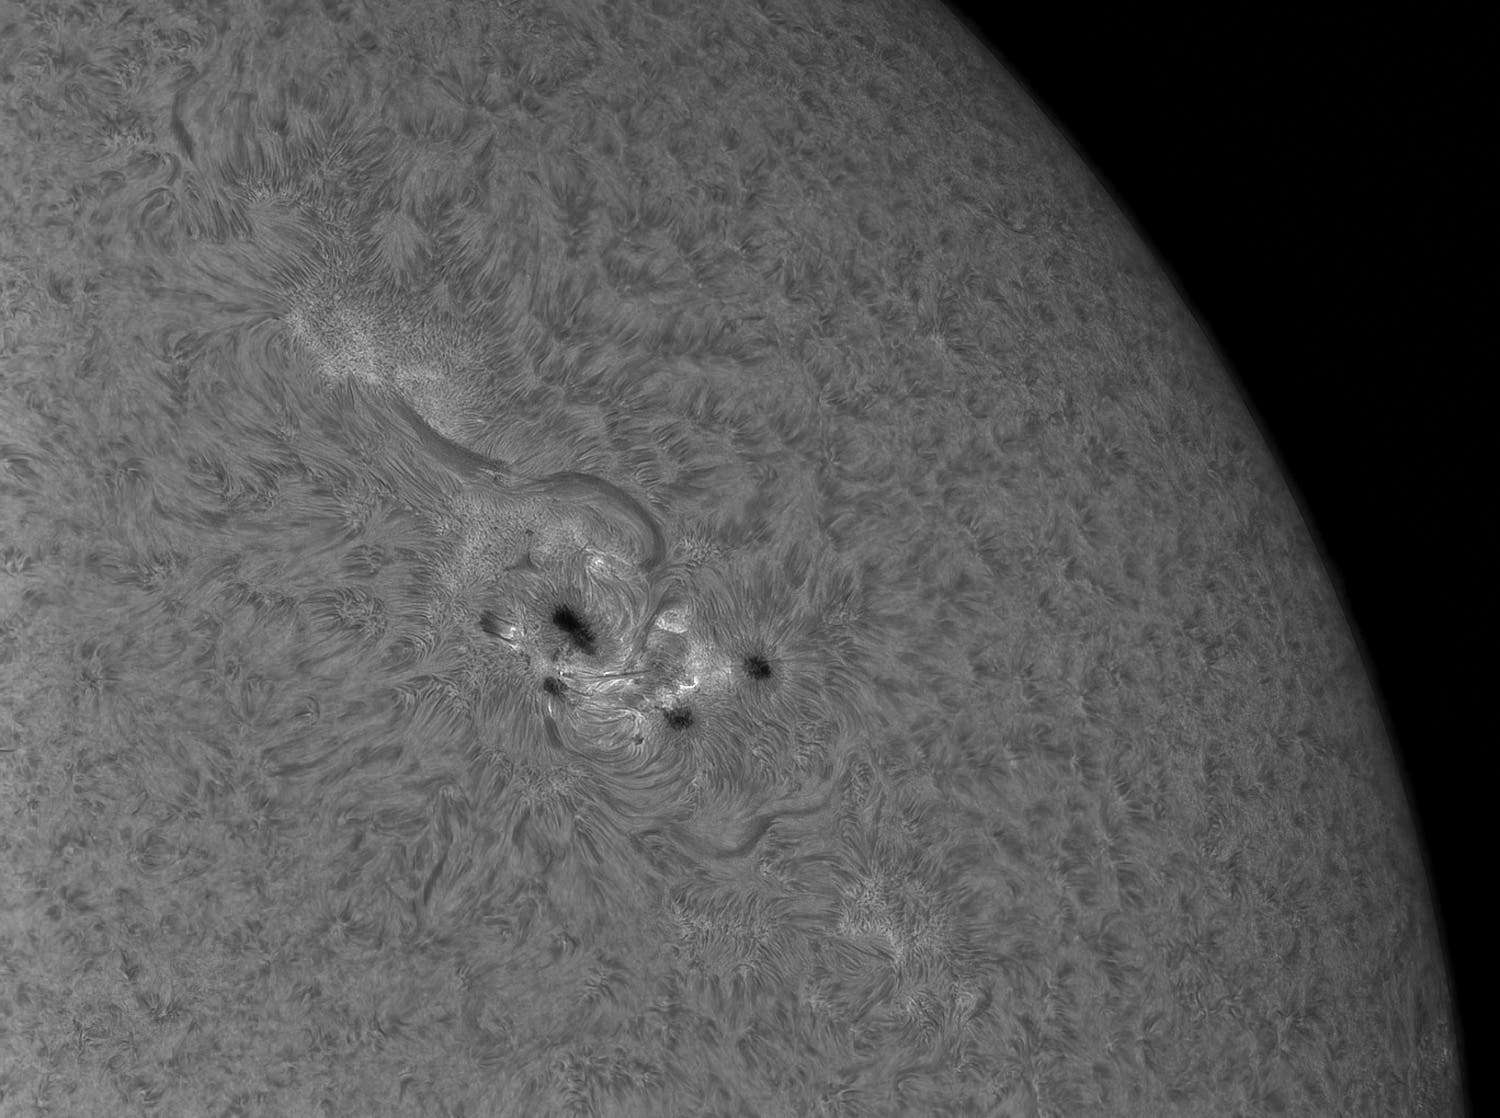 H-alpha-Sonne am 5. März 2011,  Teil 1